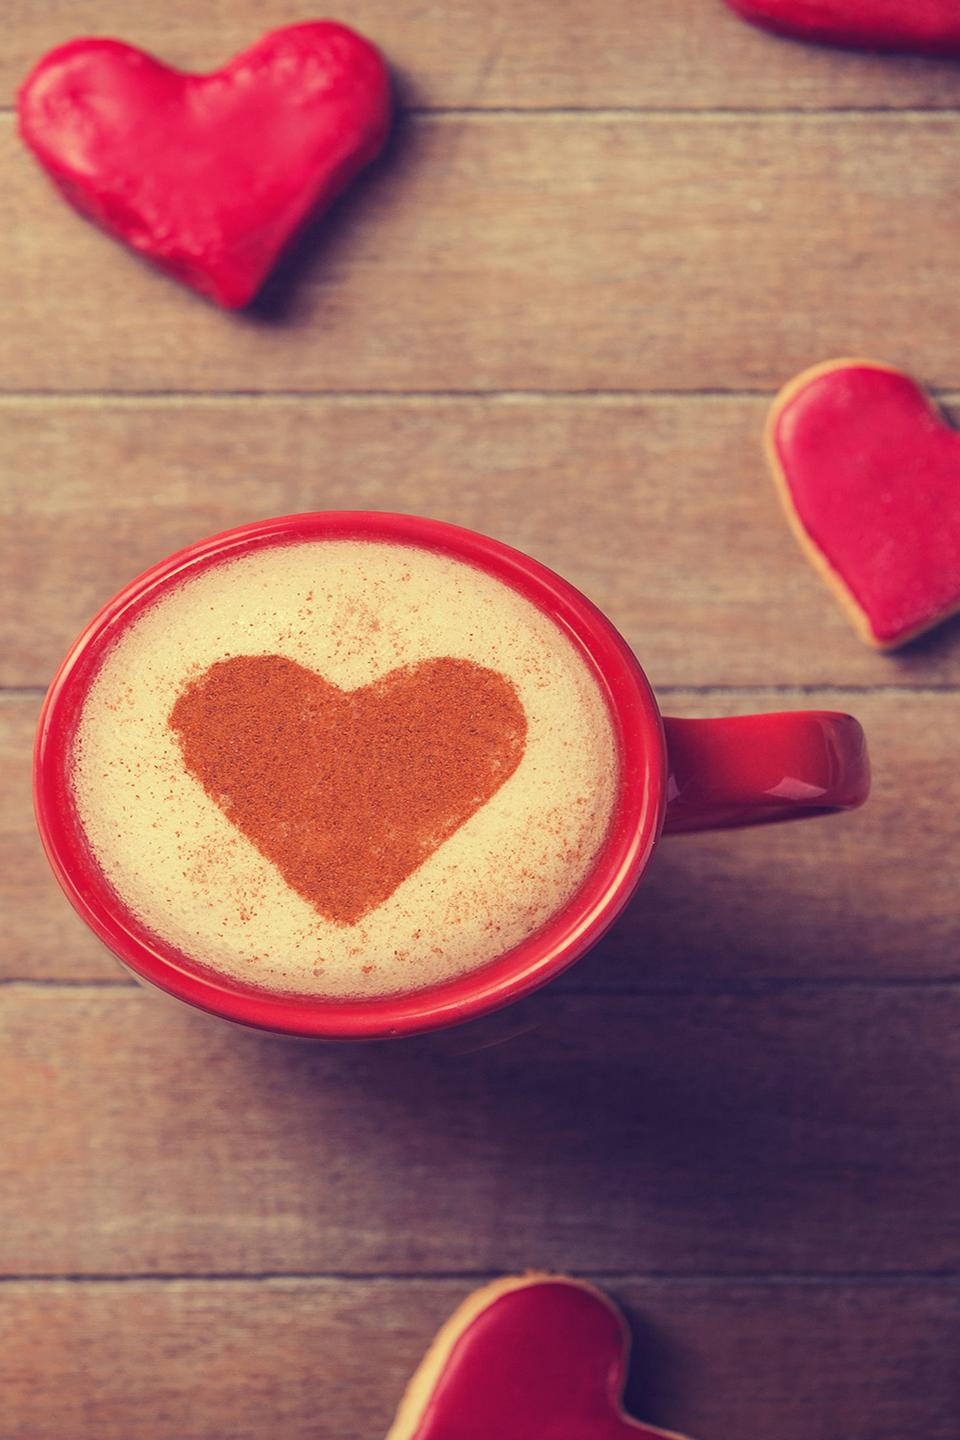 Доброе утро мужчине сердечко. Кофе с сердечком. Картинки с добрым утром с сердечками. Чашка кофе с сердечком. Сердечки романтика.